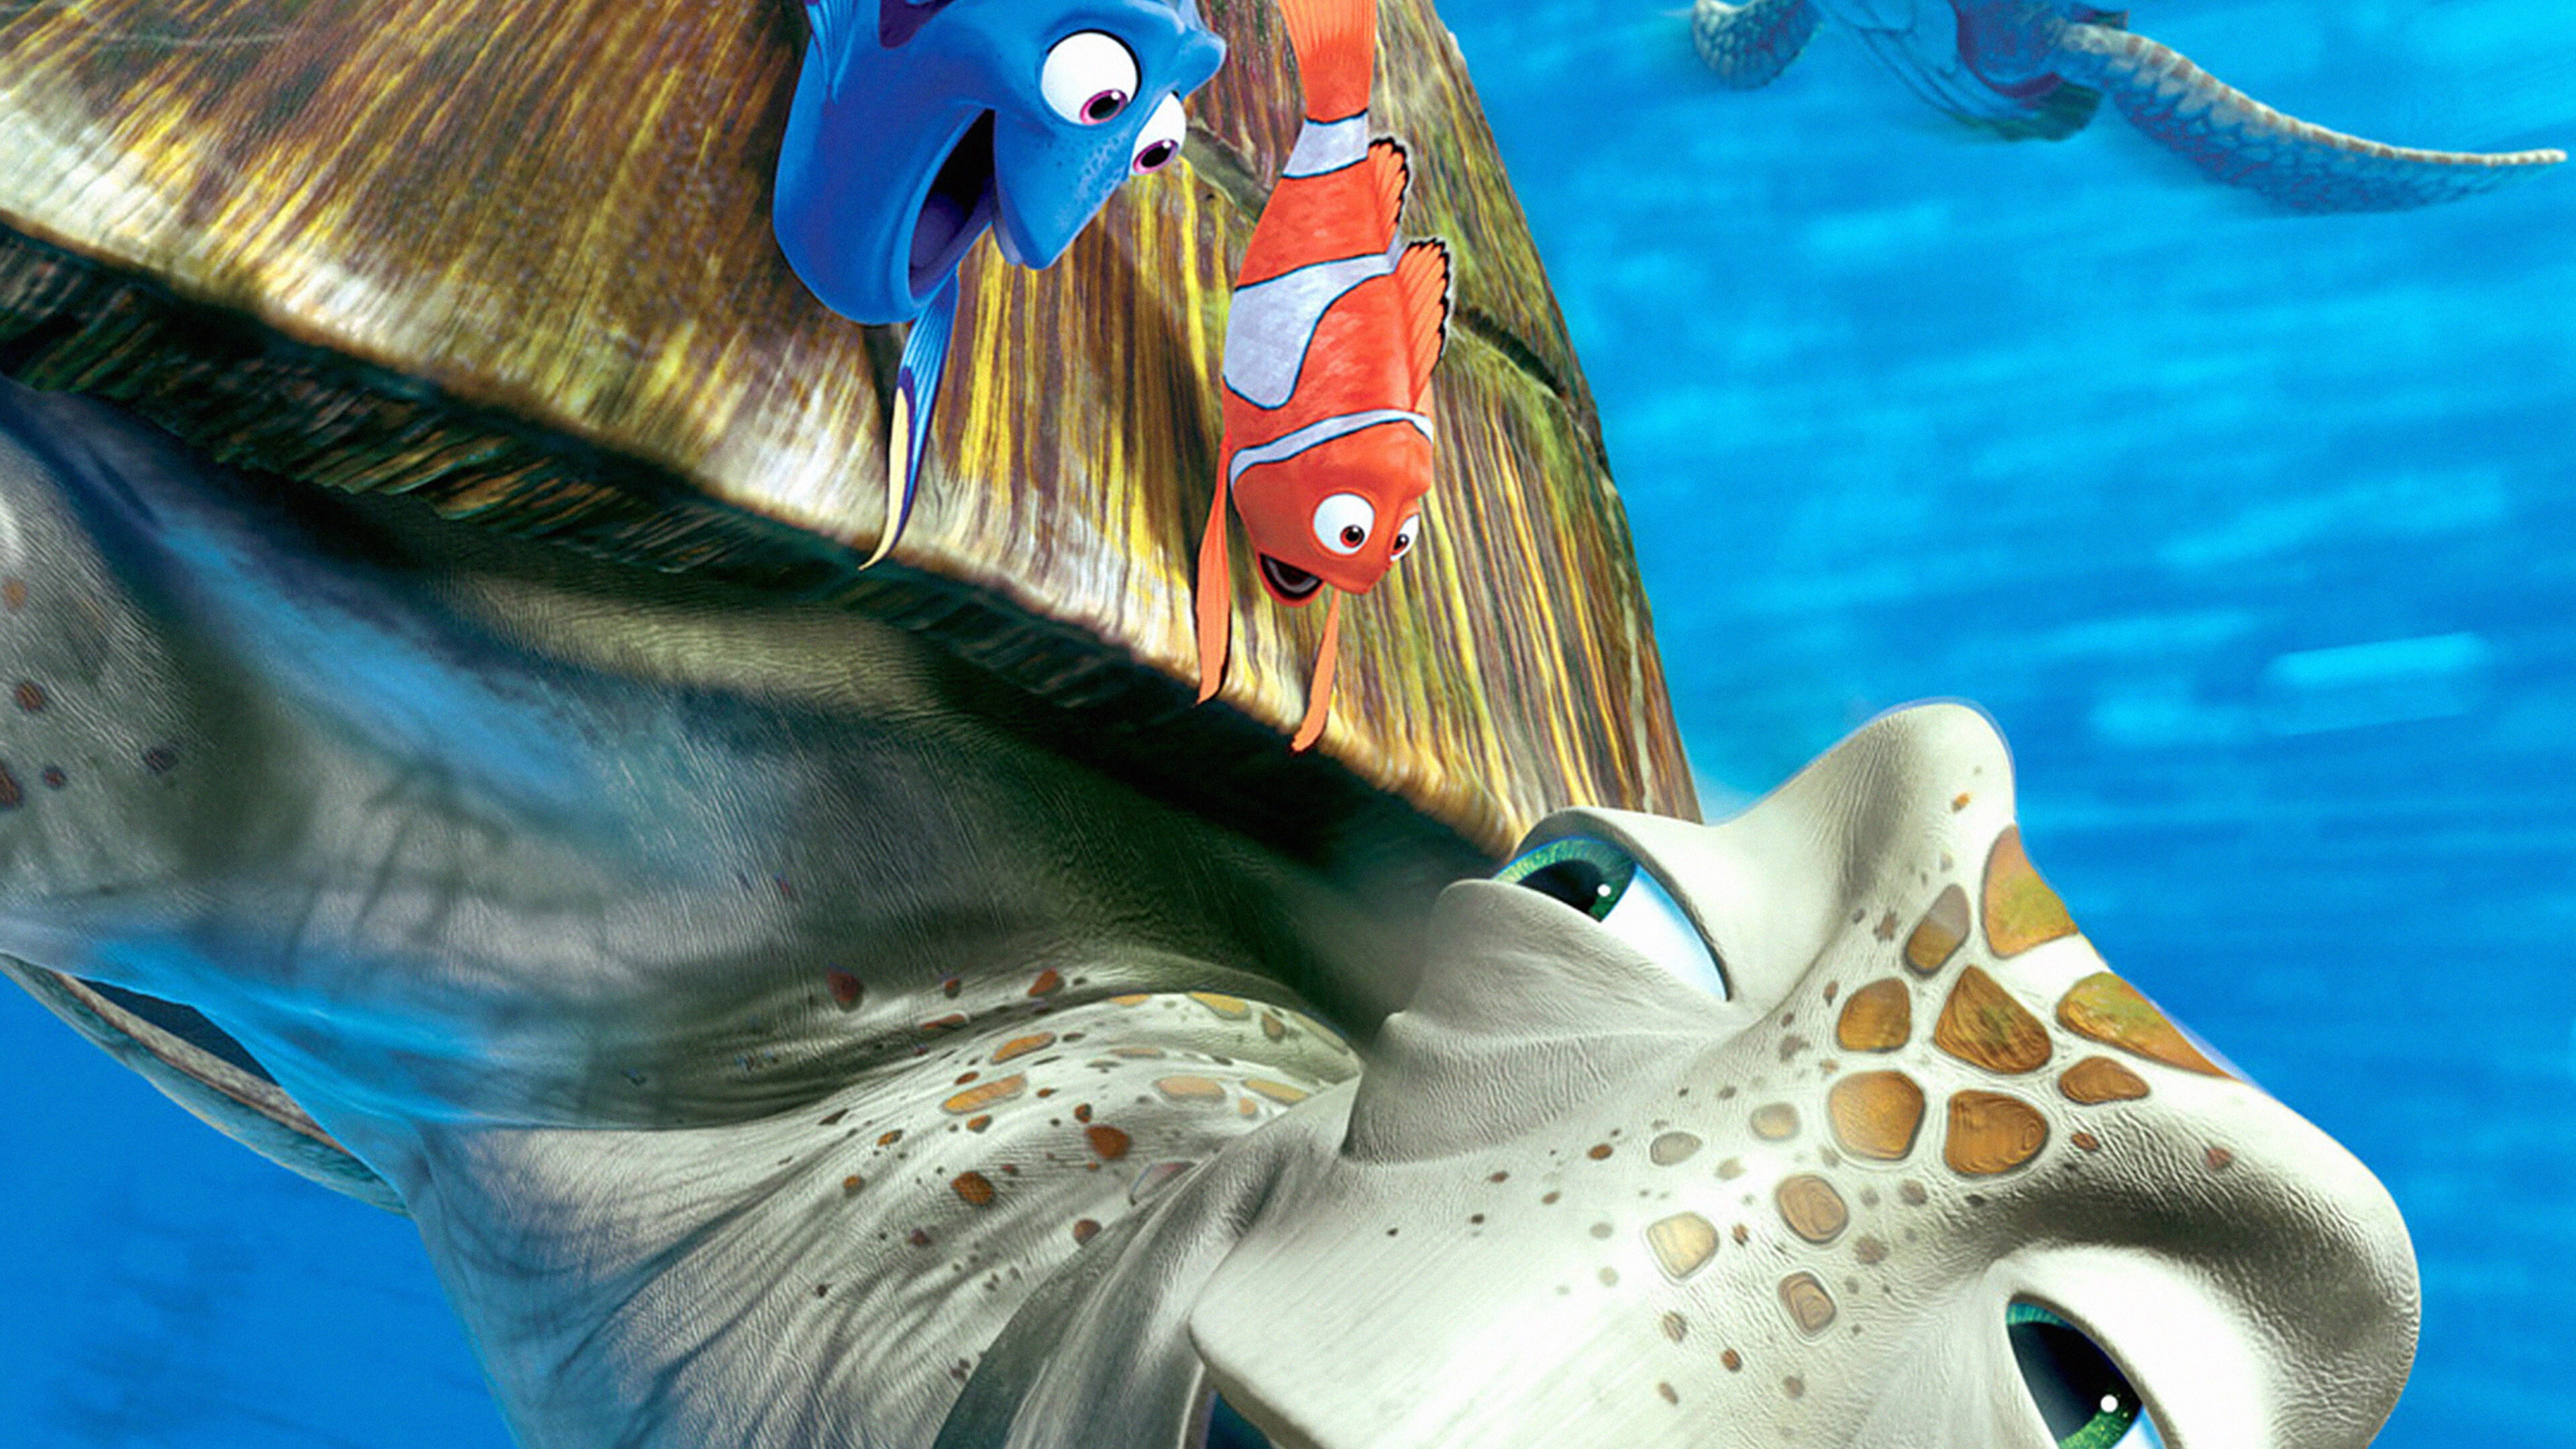 Finding Nemo: A story of young clownfish, Disney, Pixar. 3840x2160 4K Wallpaper.